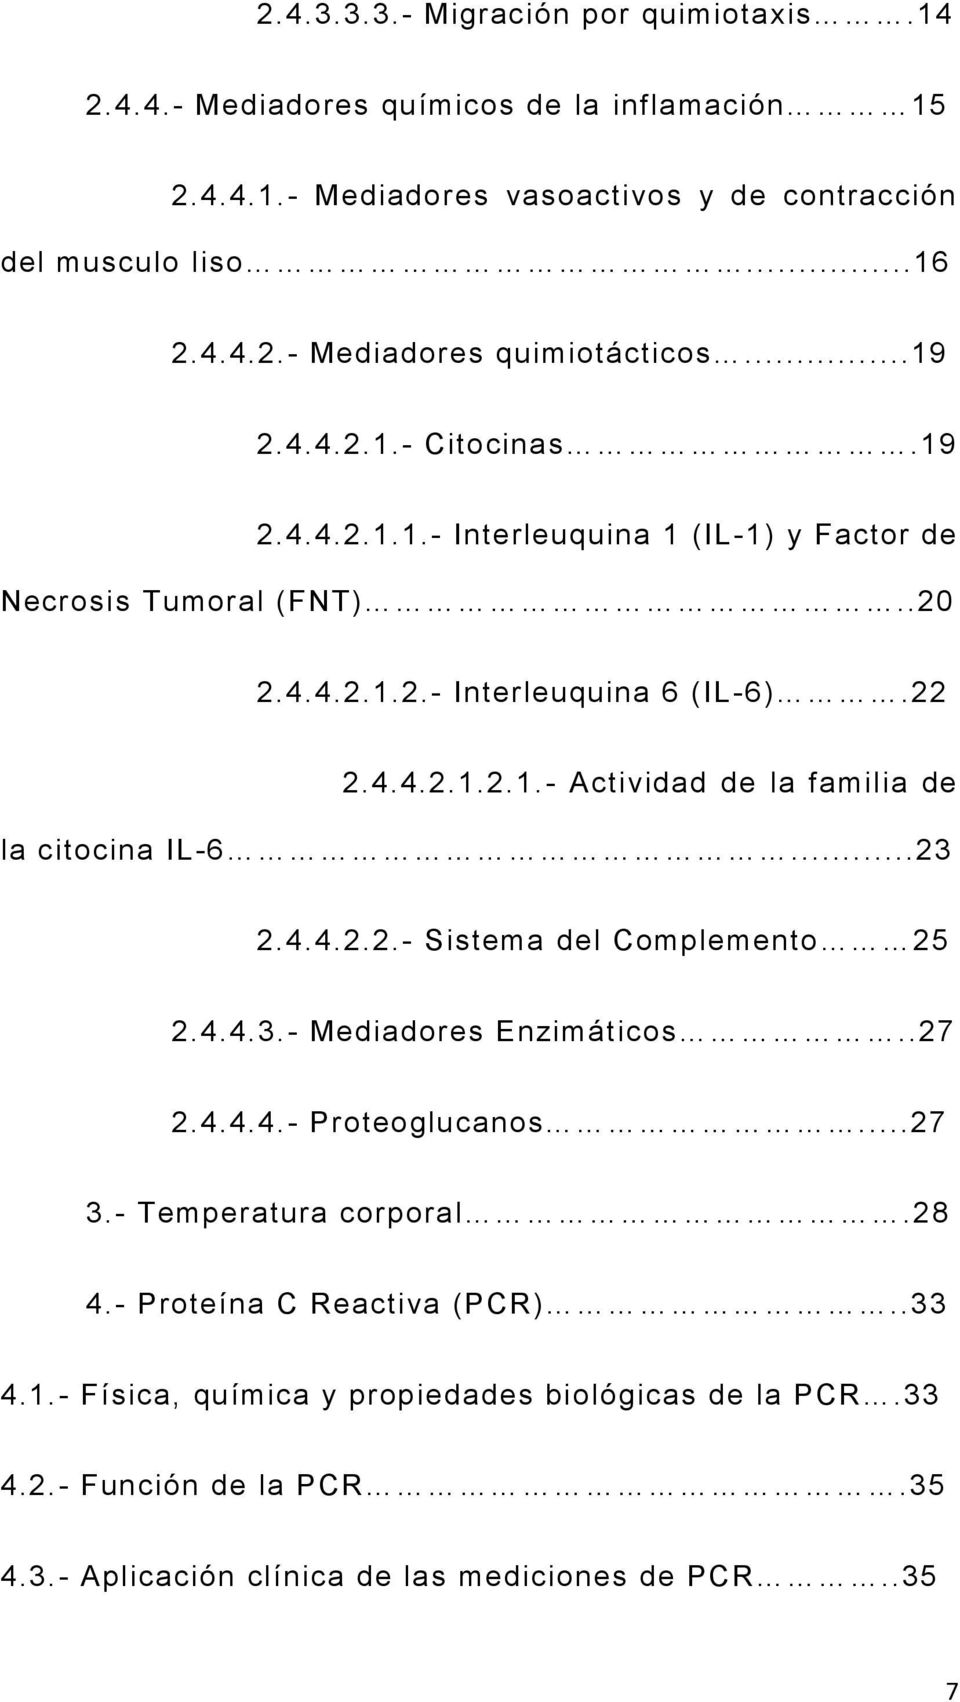 ..23 2.4.4.2.2.- Sistema del Complemento 25 2.4.4.3.- Mediadores Enzimáticos..27 2.4.4.4.- Proteoglucanos...27 3.- Temperatura corporal.28 4.- Proteína C Reactiva (PCR)..33 4.1.